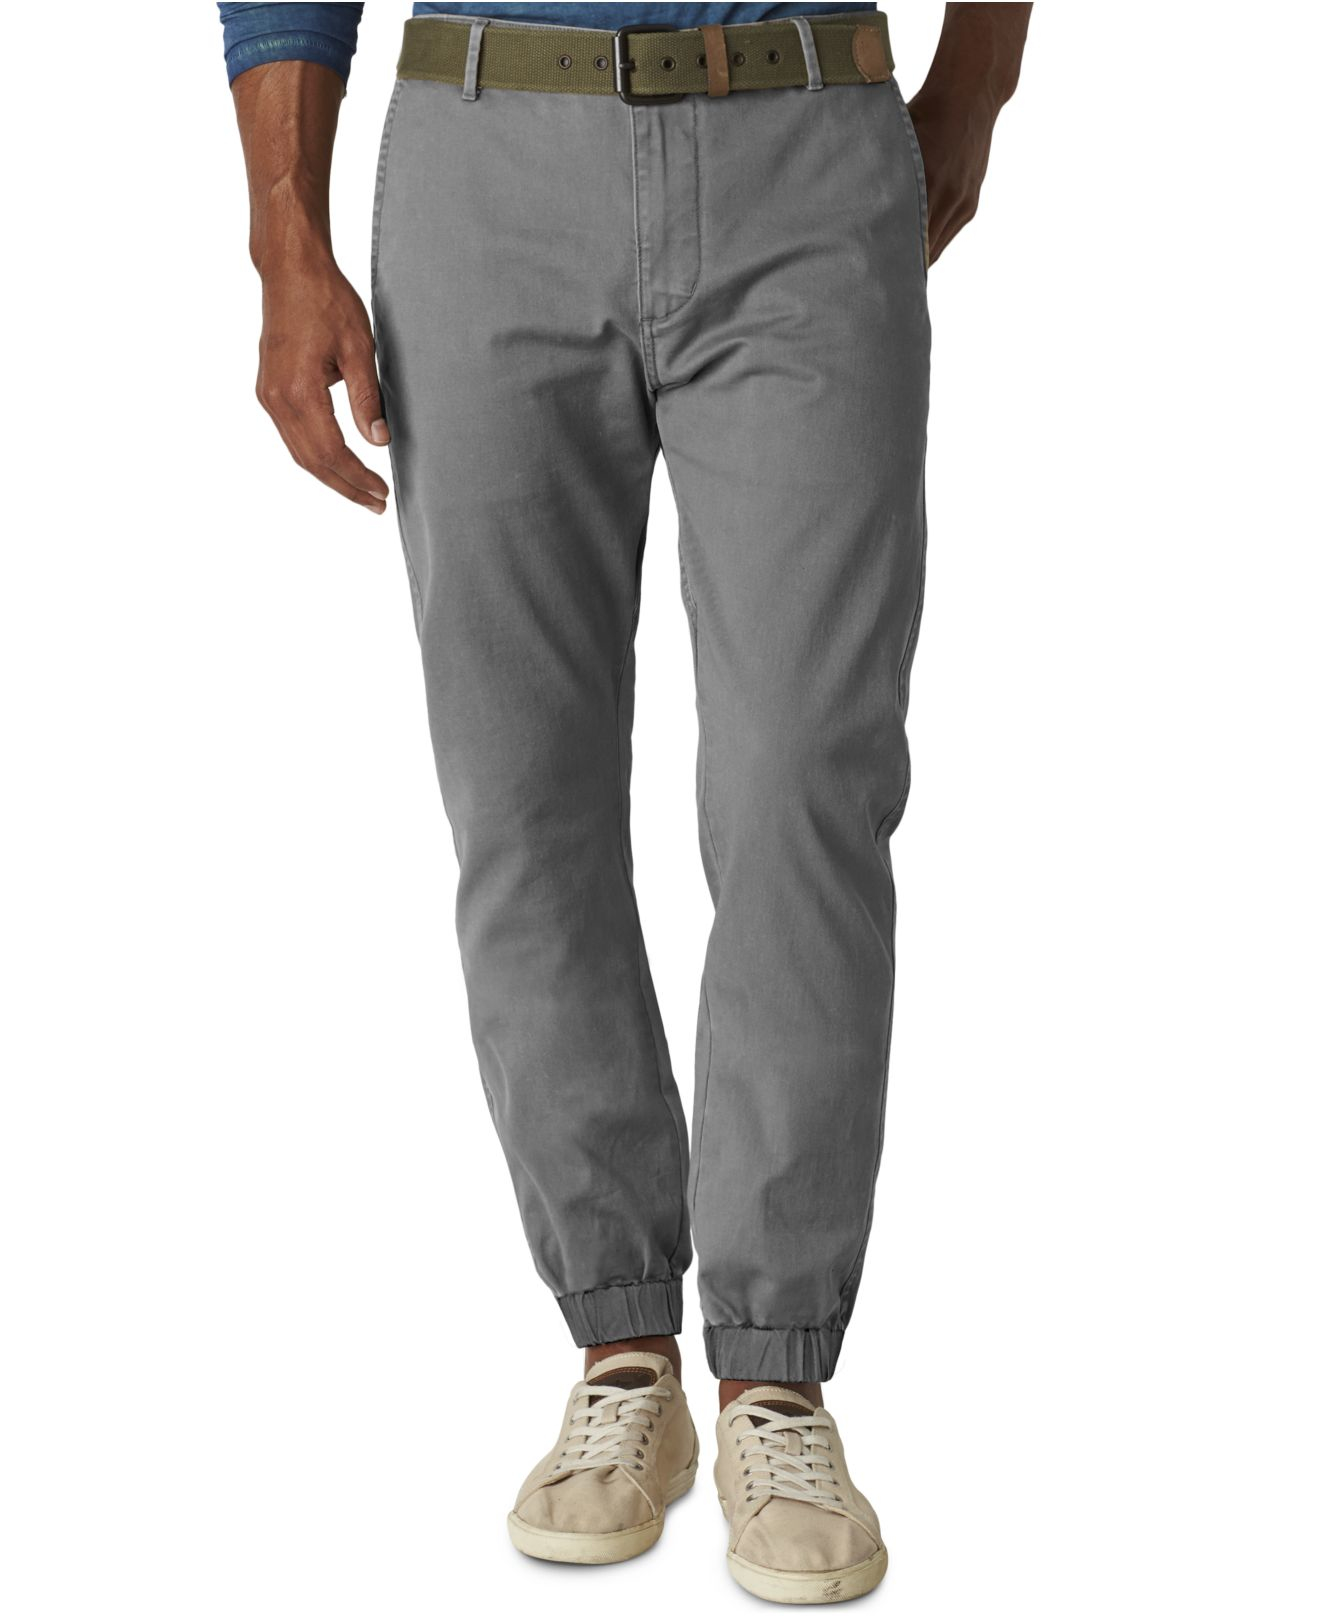 Dockers Alpha Slim-fit Jogger Pants in Grey (Gray) for Men - Lyst